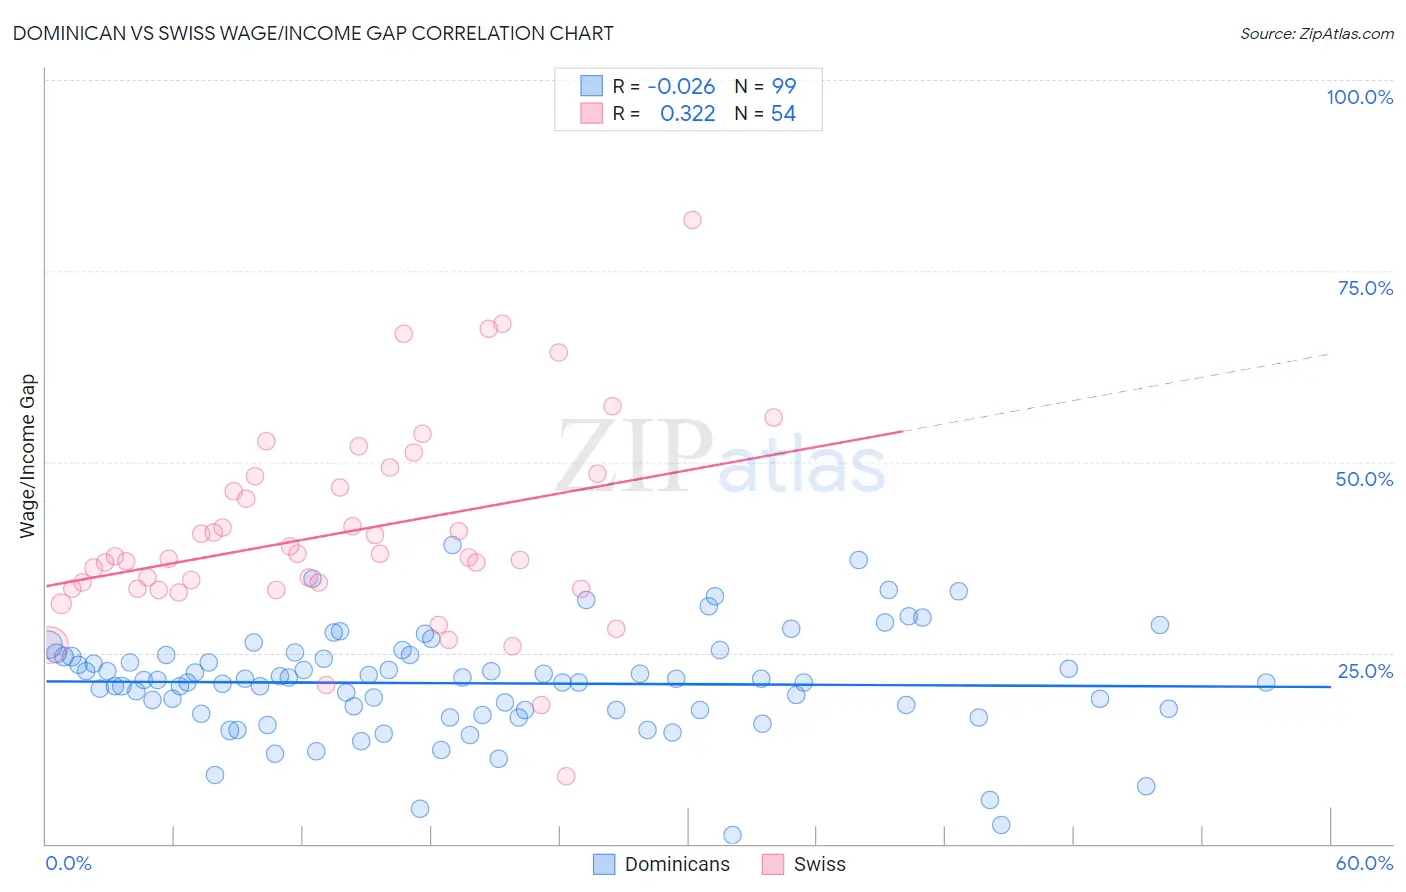 Dominican vs Swiss Wage/Income Gap